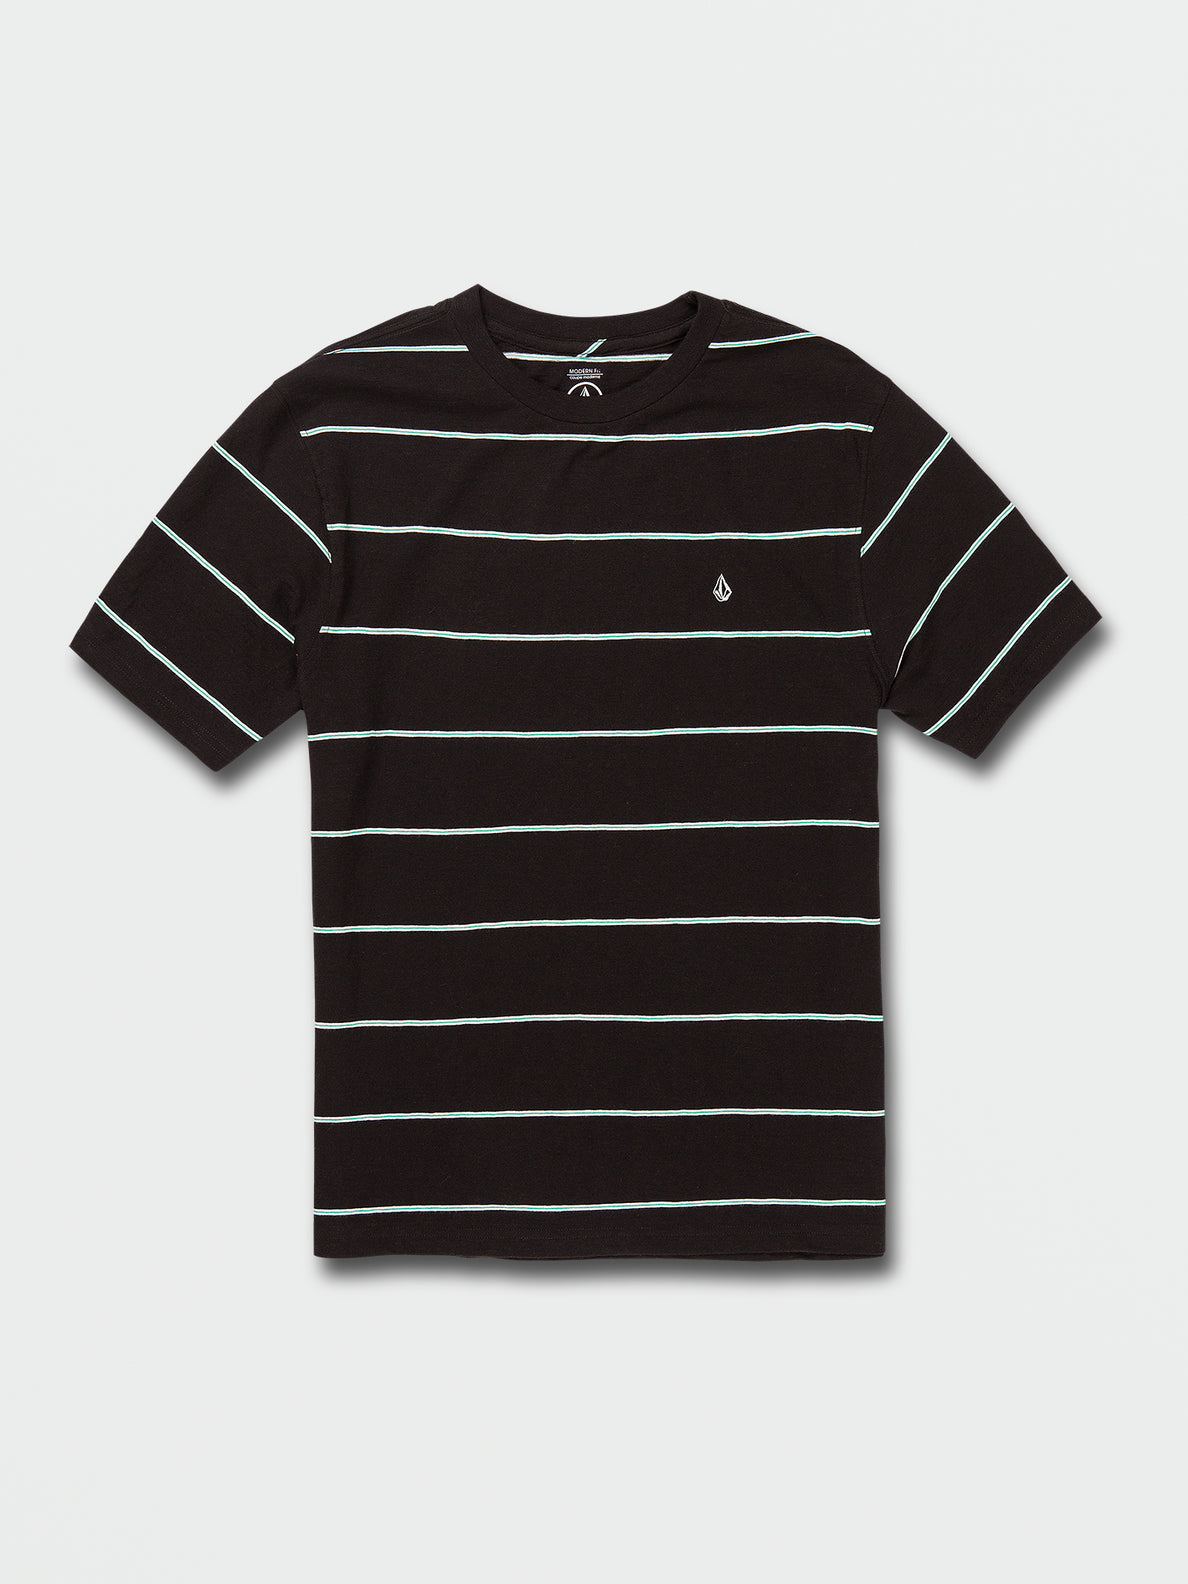 Rouston Crew Short Sleeve Shirt - Black (A0122203_BLK) [F]